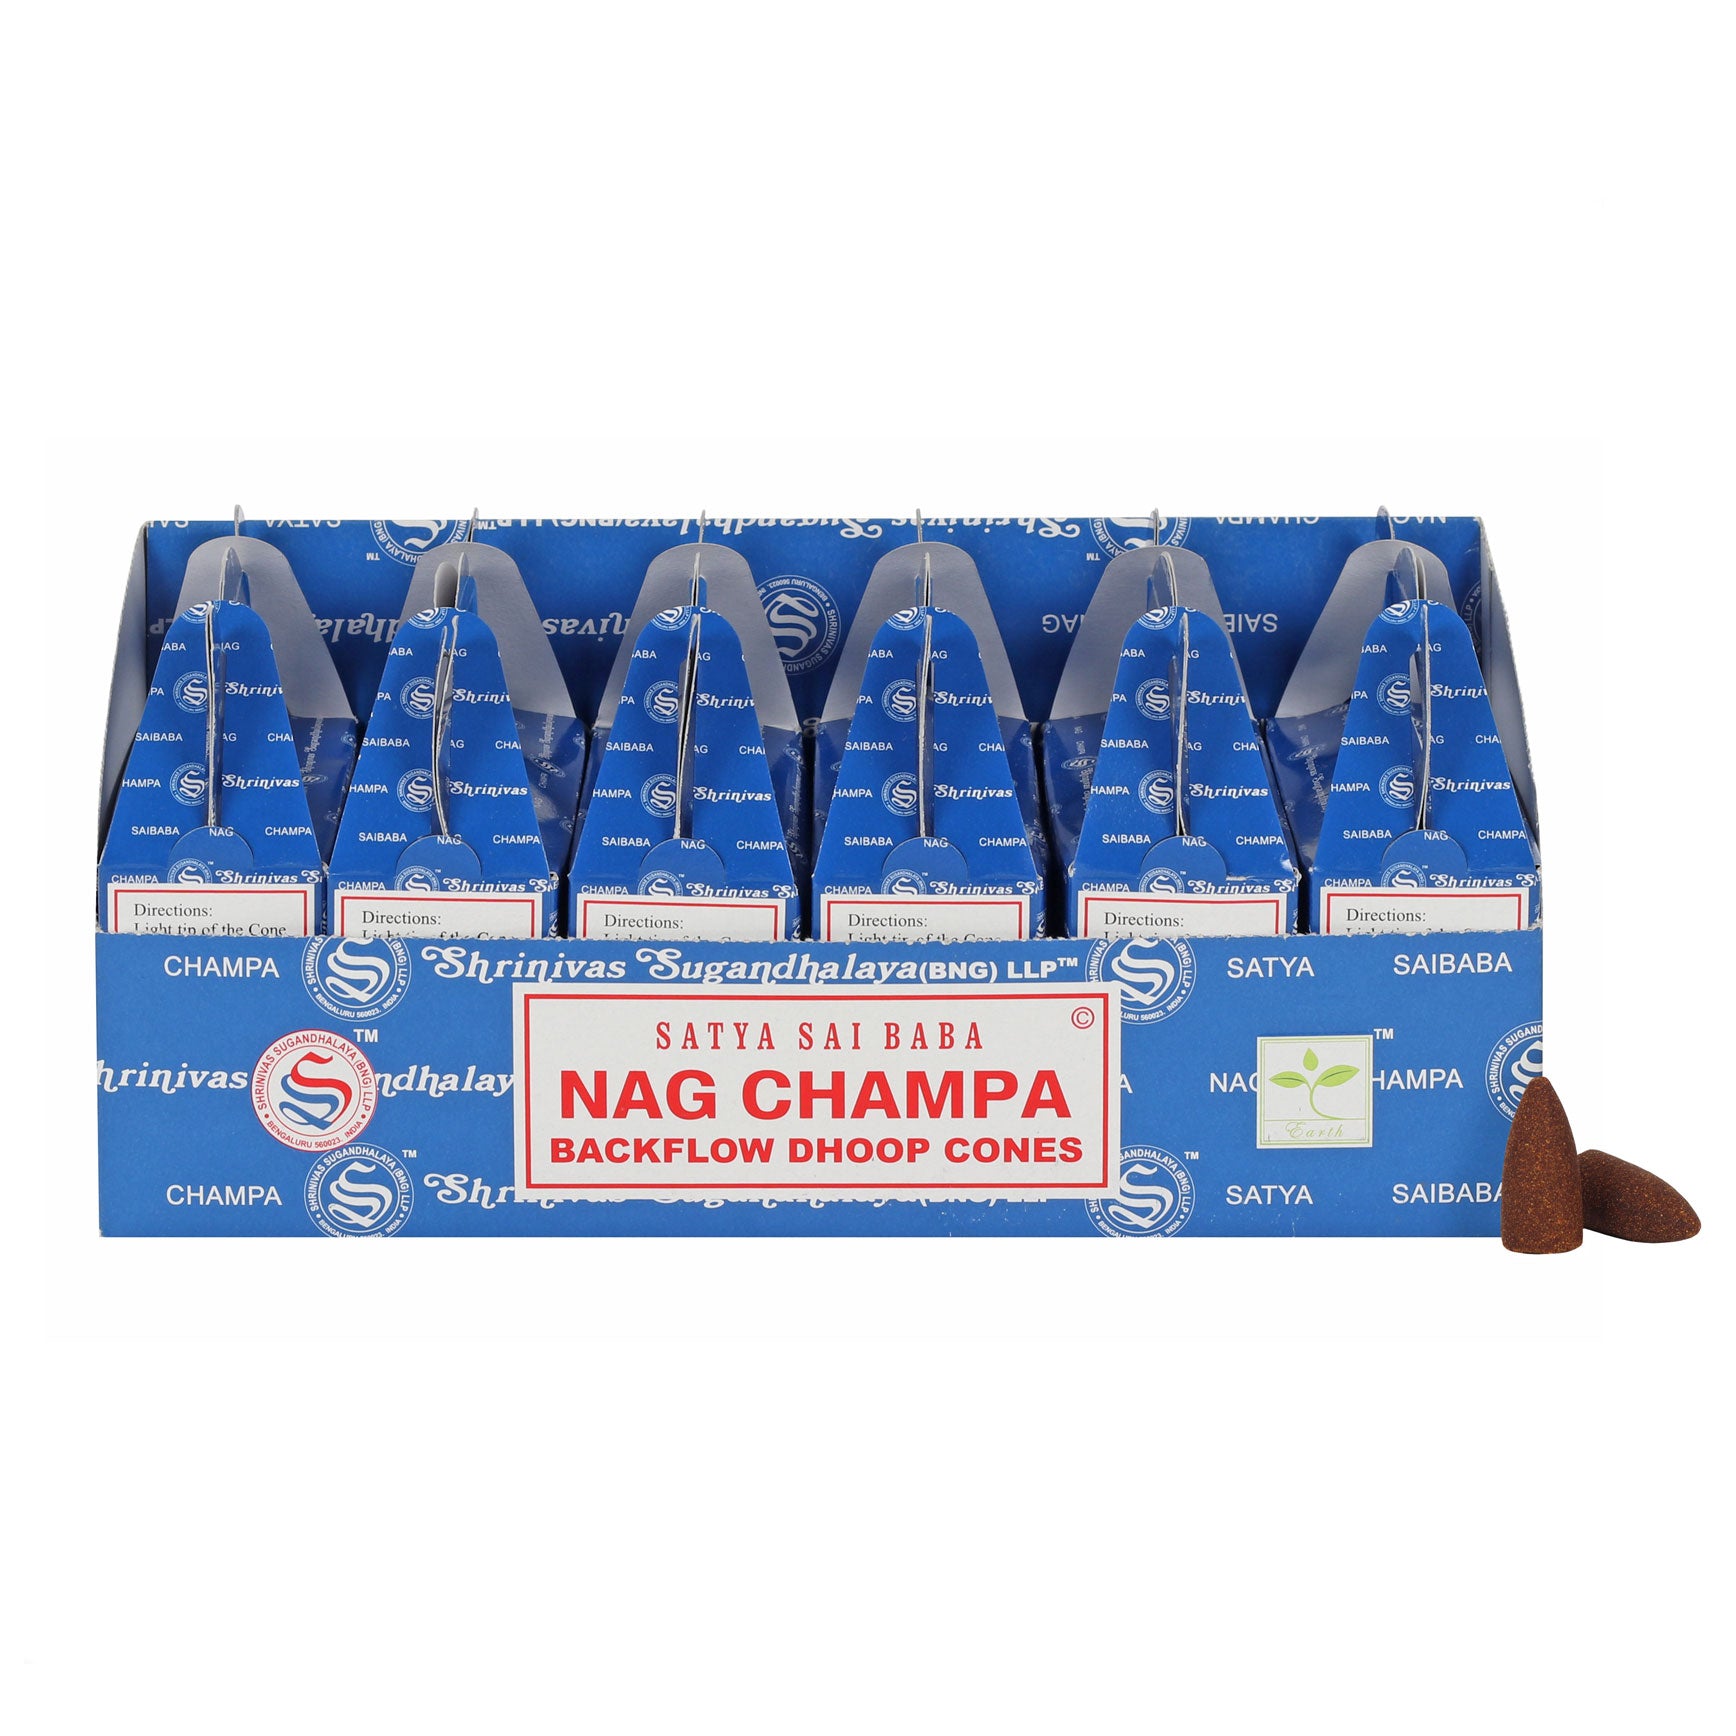 View Set of 6 Packets of Satya Nag Champa Backflow Dhoop Cones information